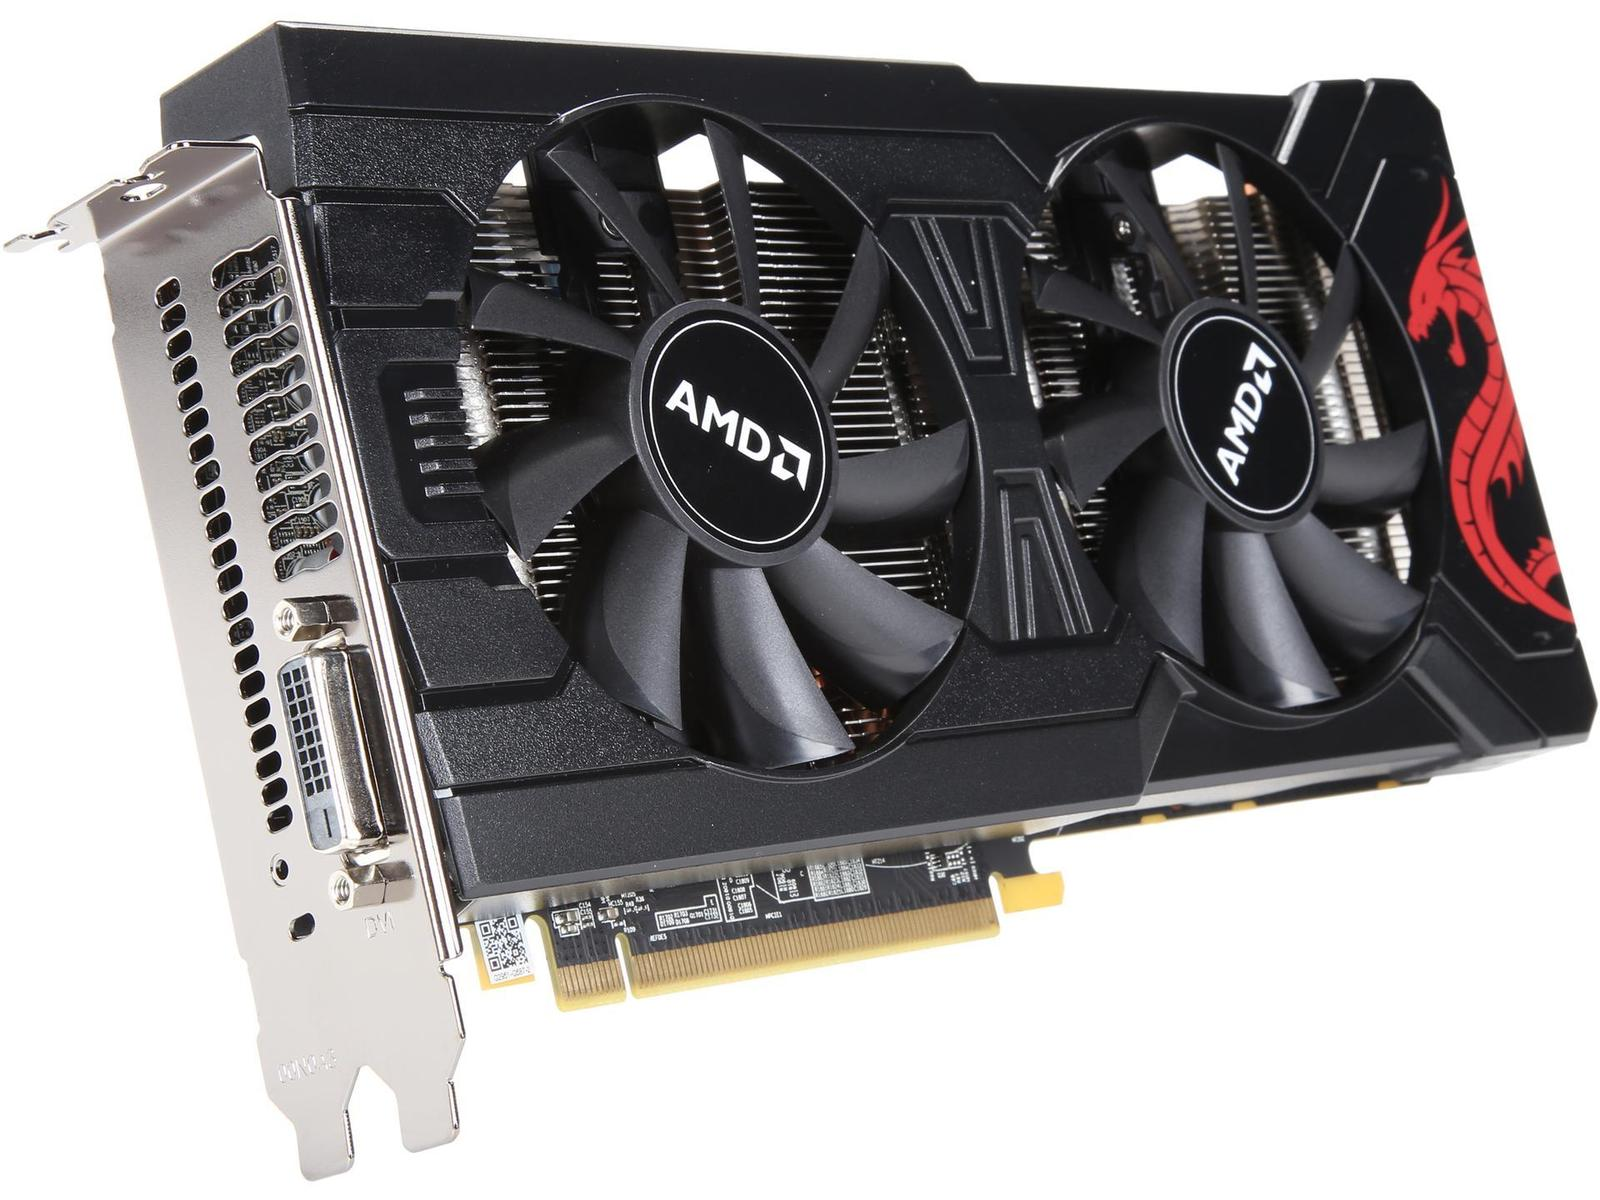 Rx 570 series цена. AMD Radeon RX 570 8gb. Видеокарта RX 570 8gb. AMD RX 570 4gb. POWERCOLOR RX 570 8gb.